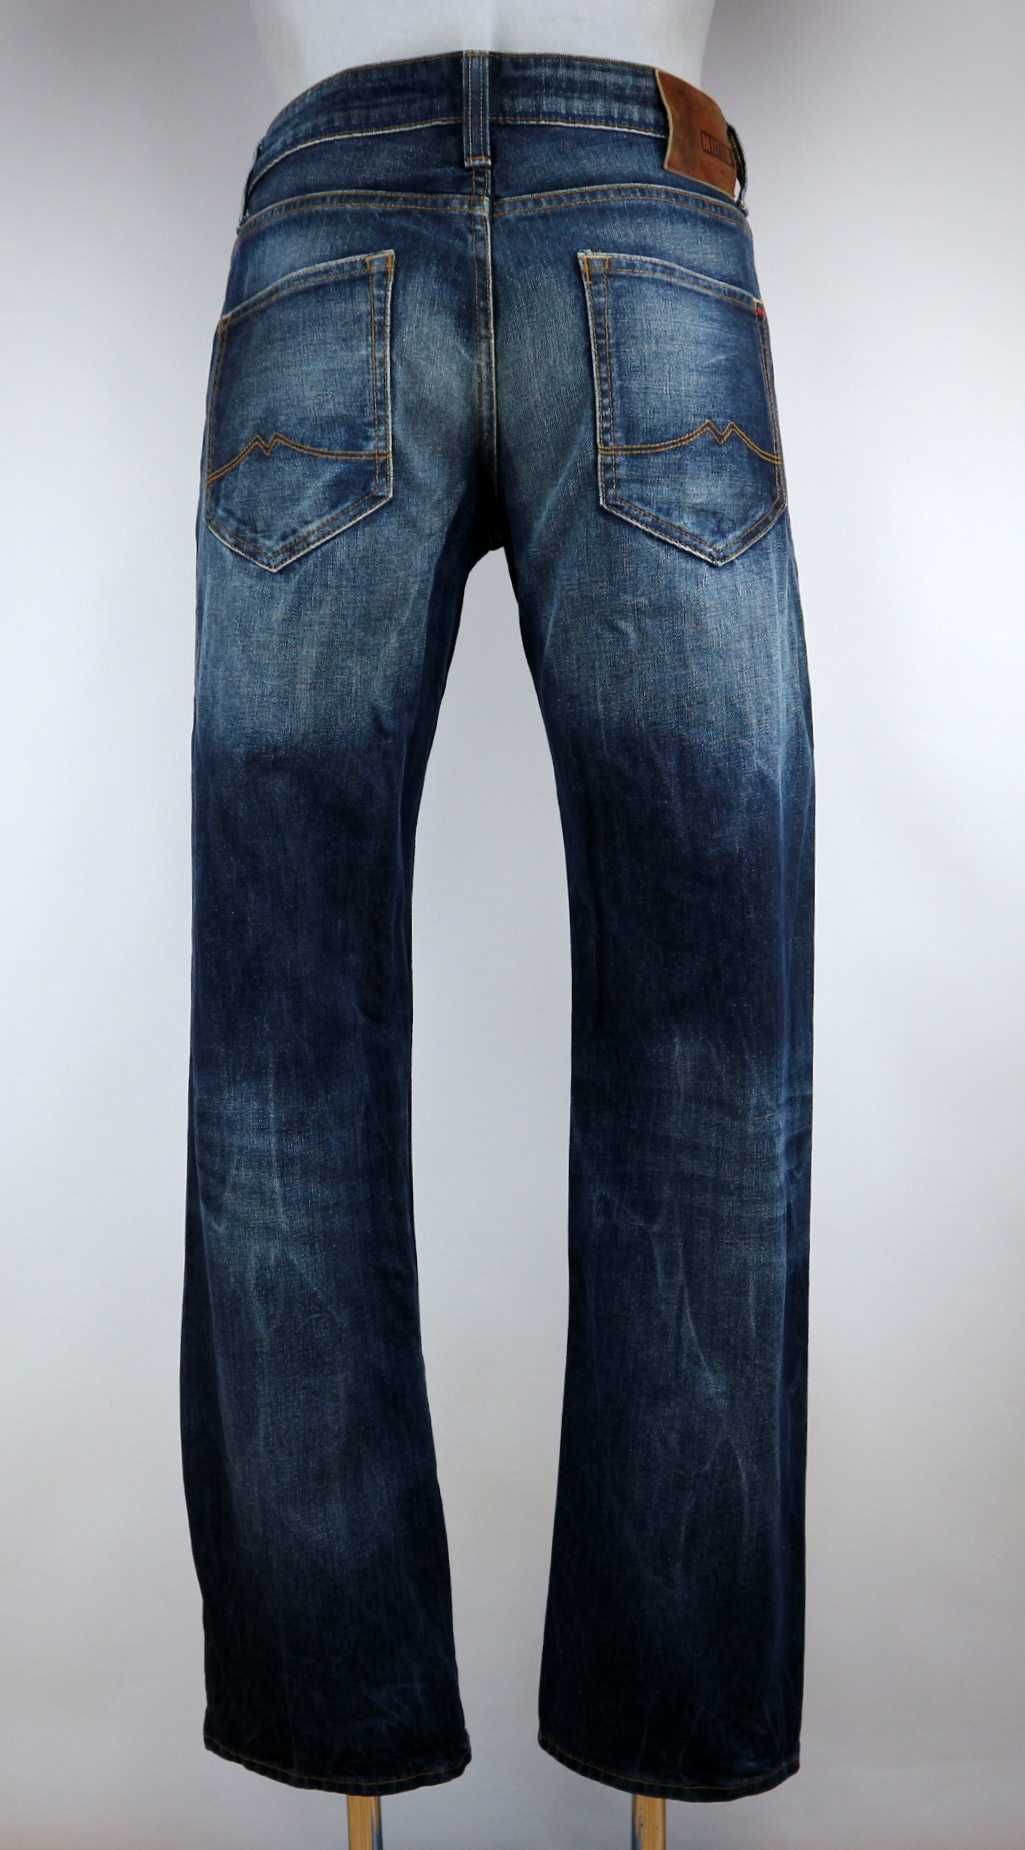 Mustang Michigan spodnie jeansy W33 L34 pas 2 x 44 cm